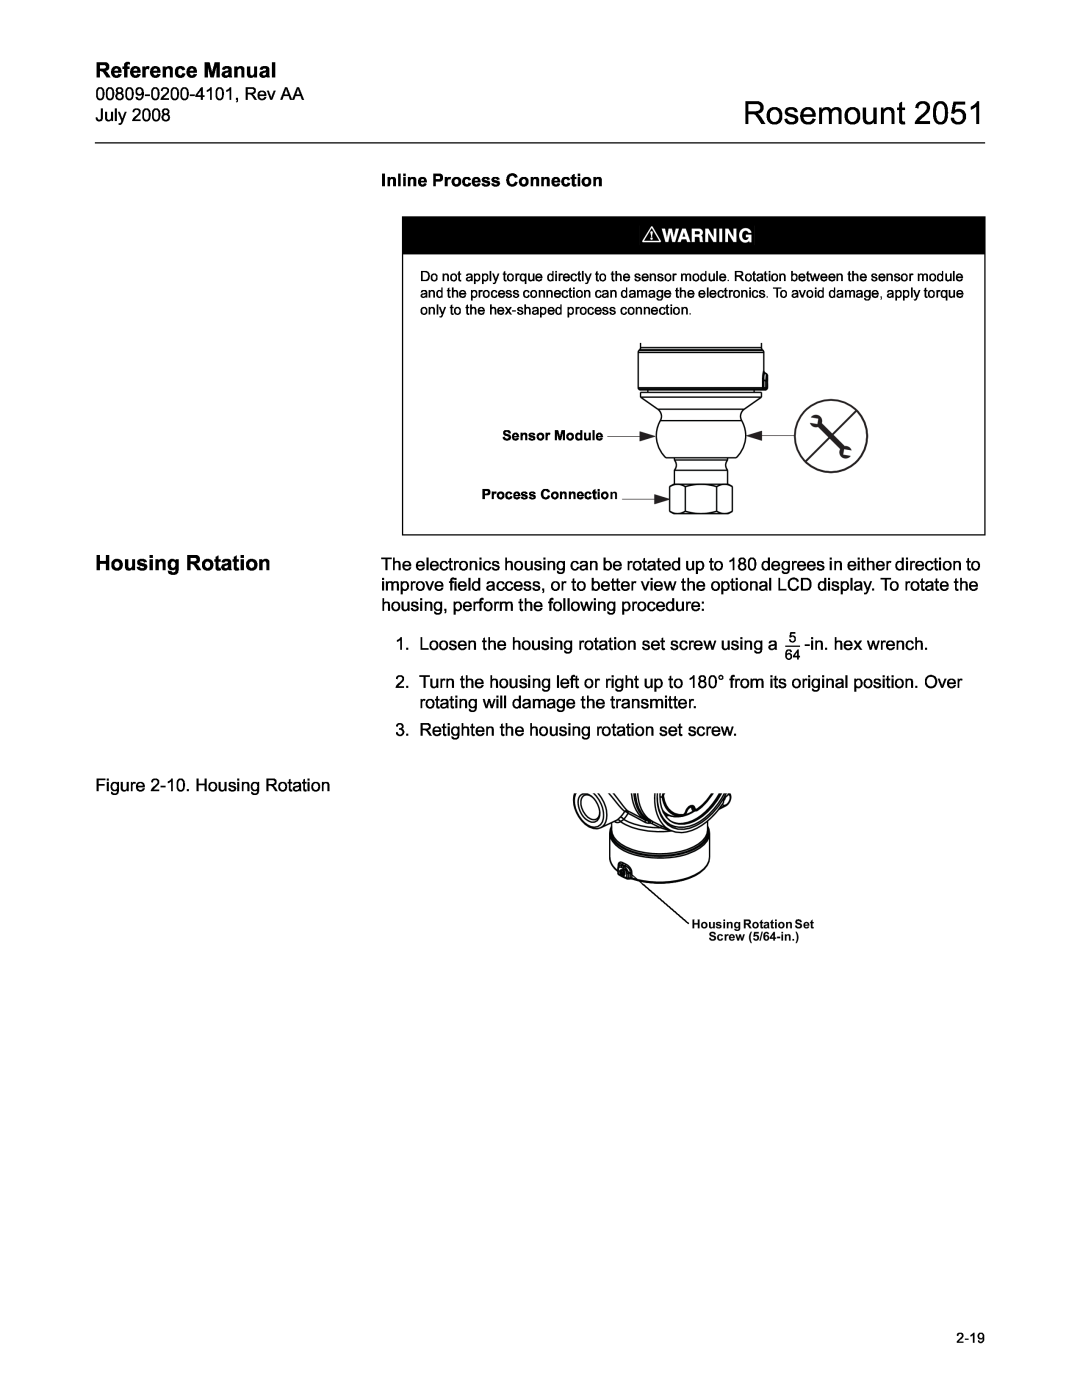 Emerson Process Management 2051 manual Housing Rotation, Rosemount, Reference Manual 